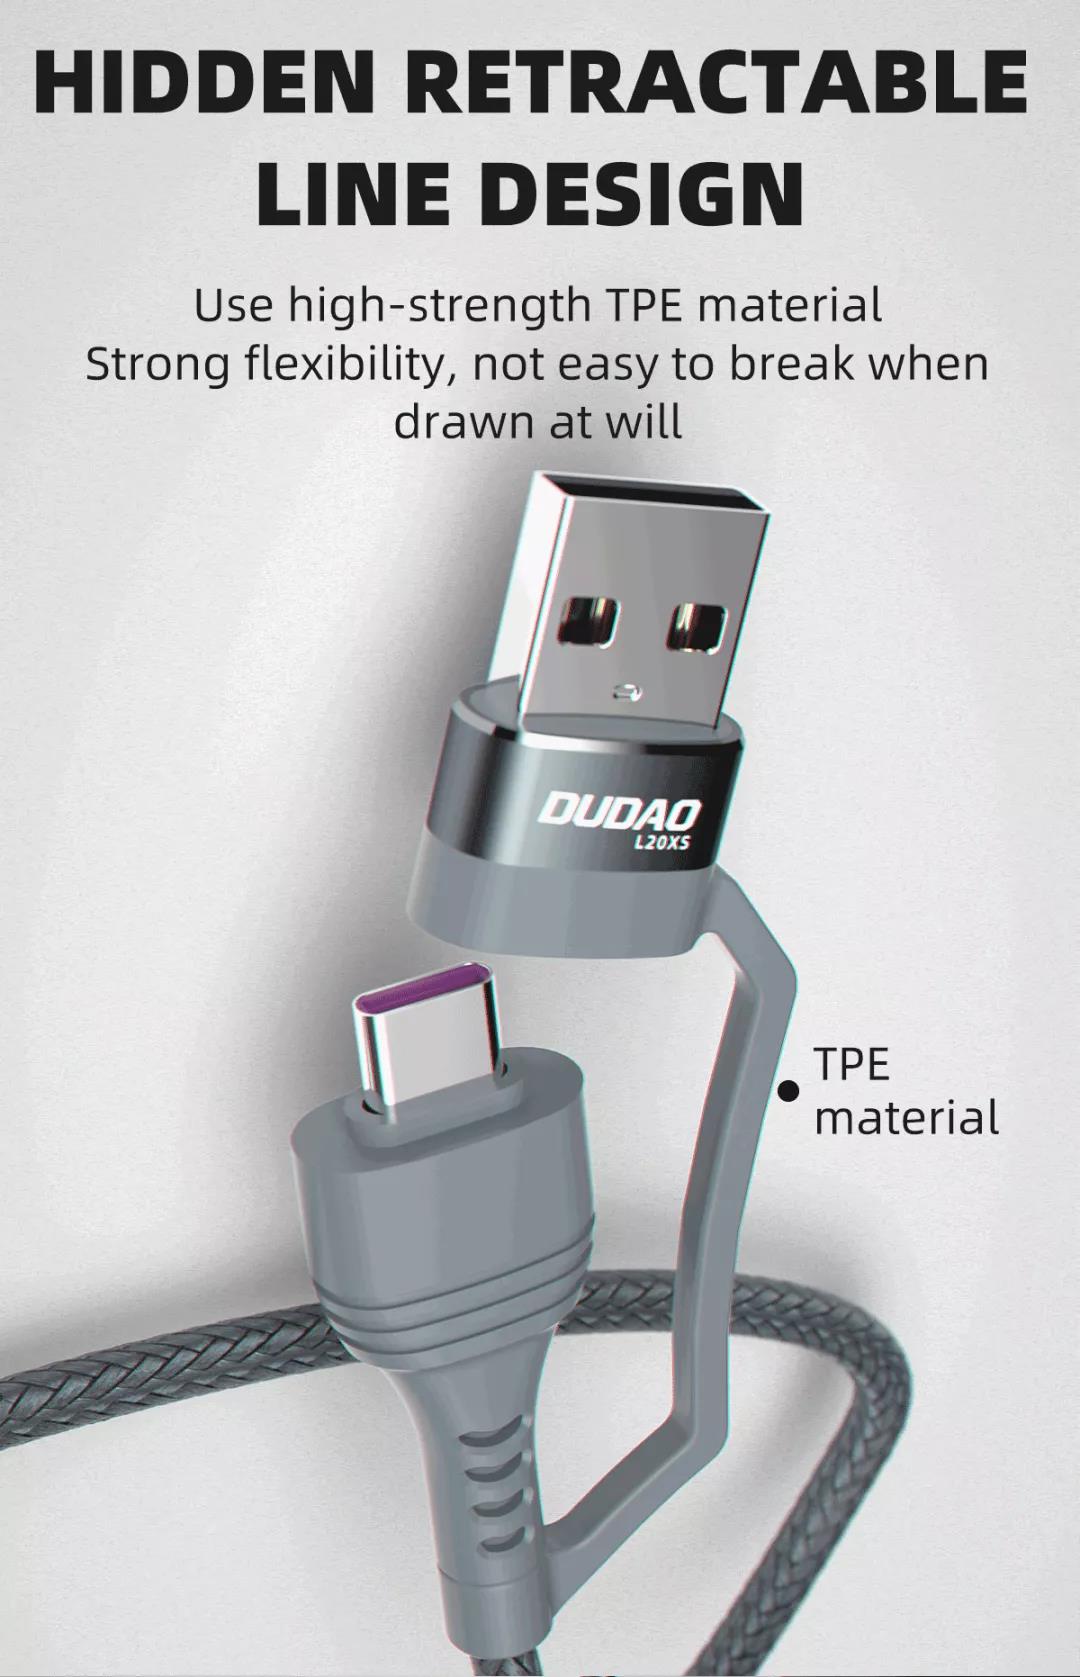 Dudao 升級版 4合1 USB / Type-C轉Lightning / Type-C 1米100W PD 多功能快充數據線 L20XS